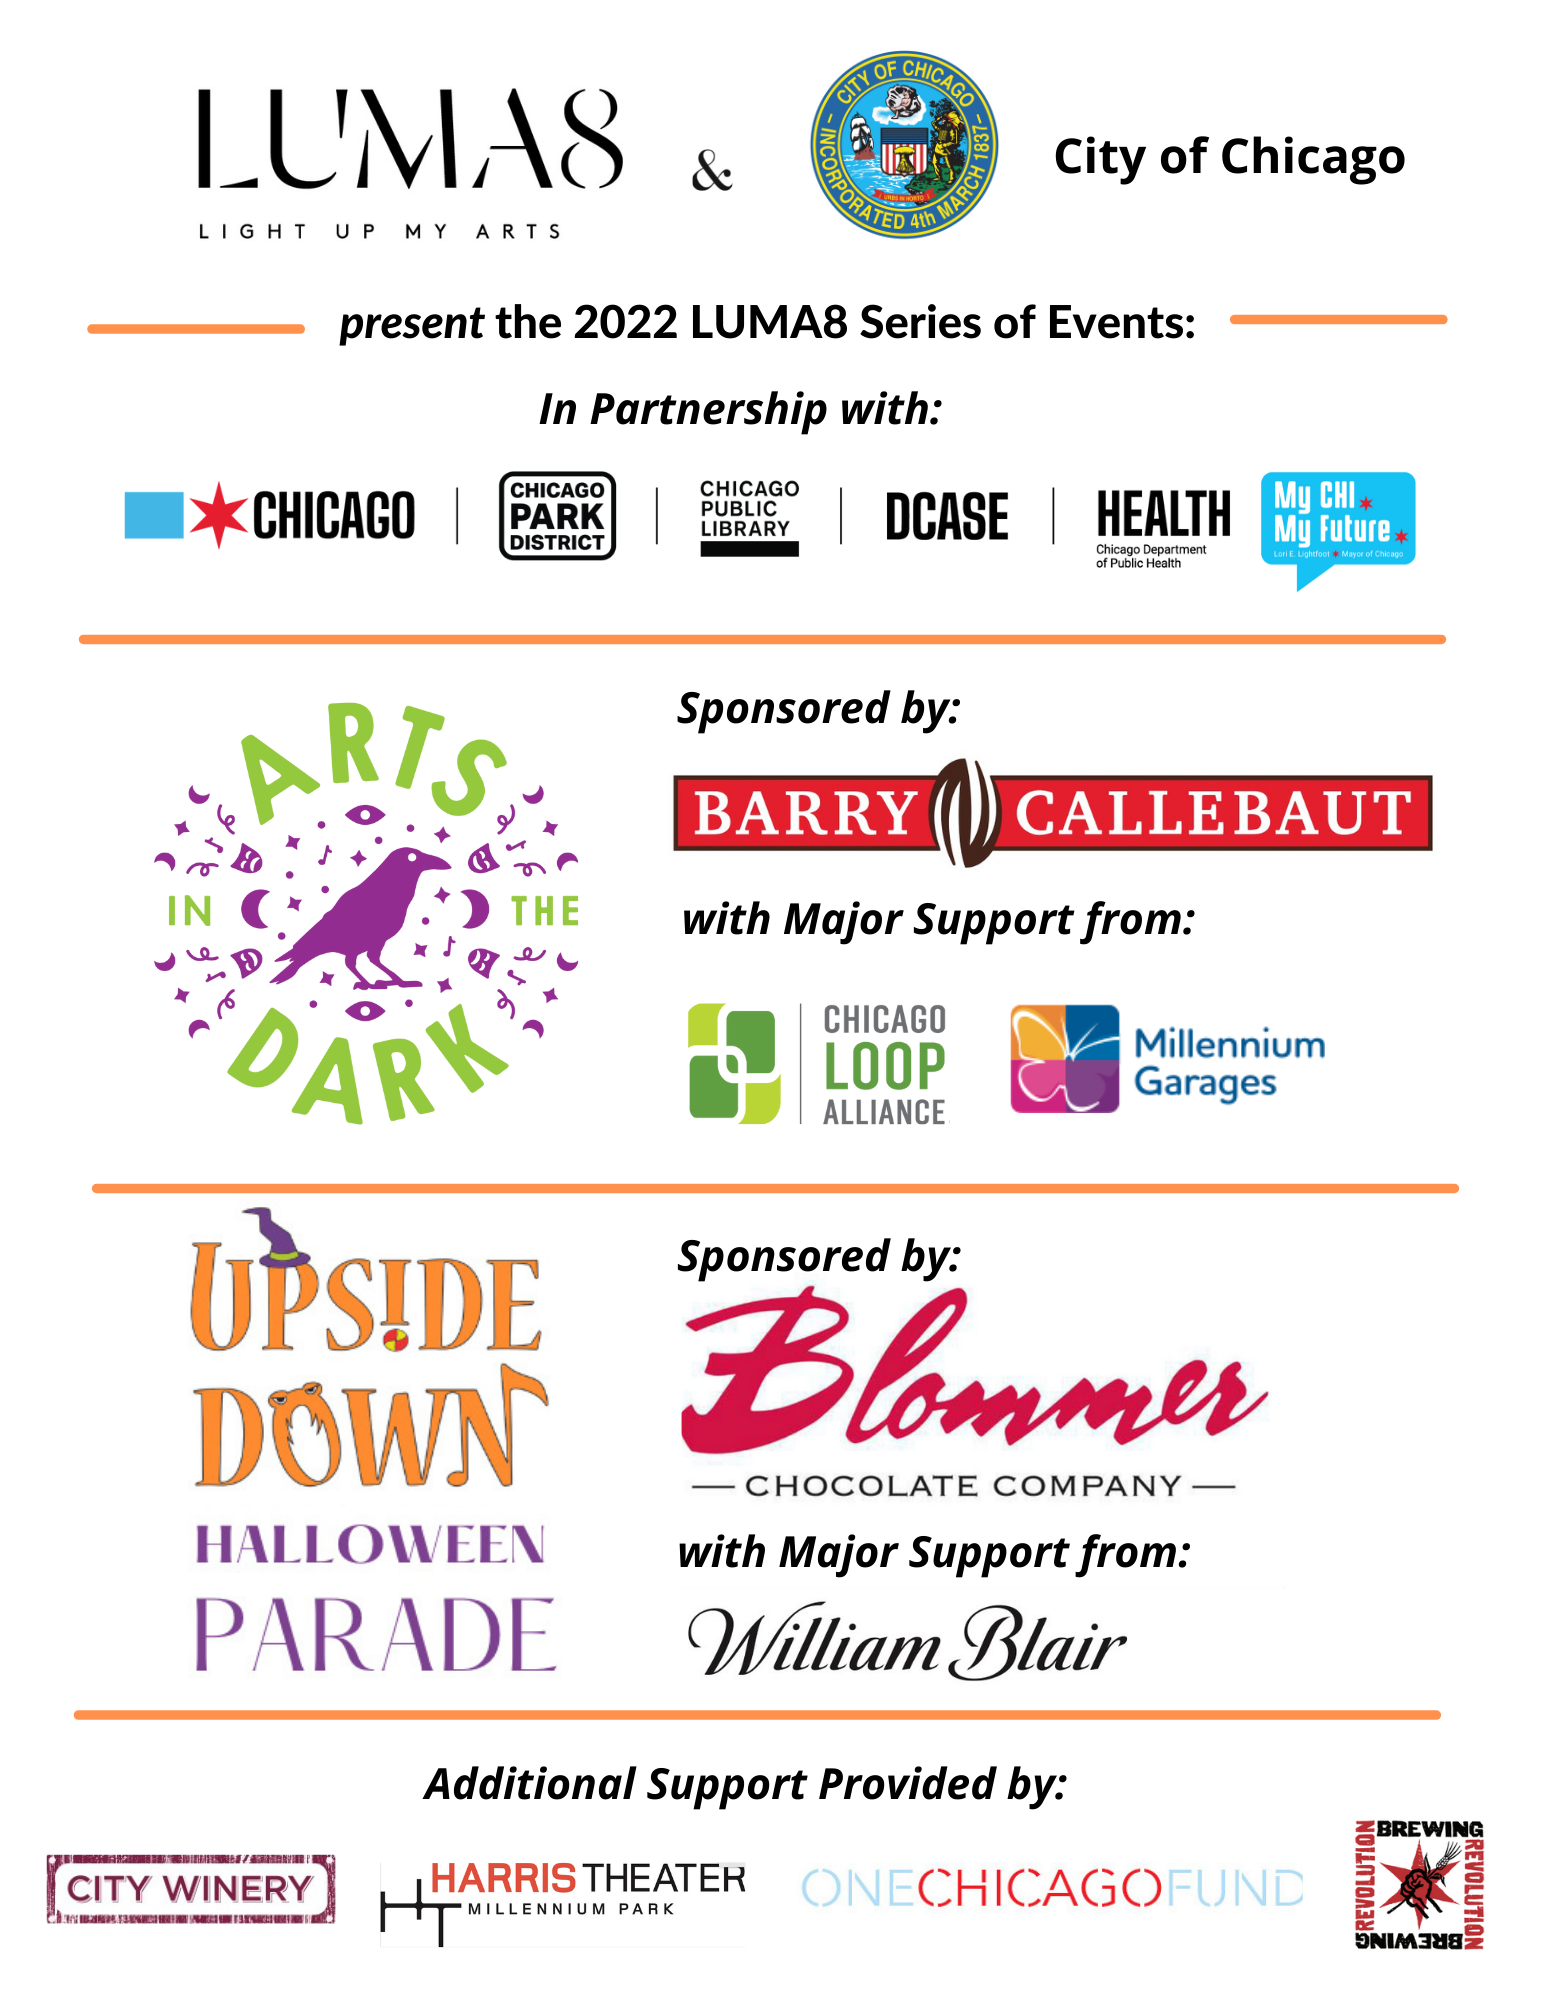 The 2021 LUMA8 Event Sponsors